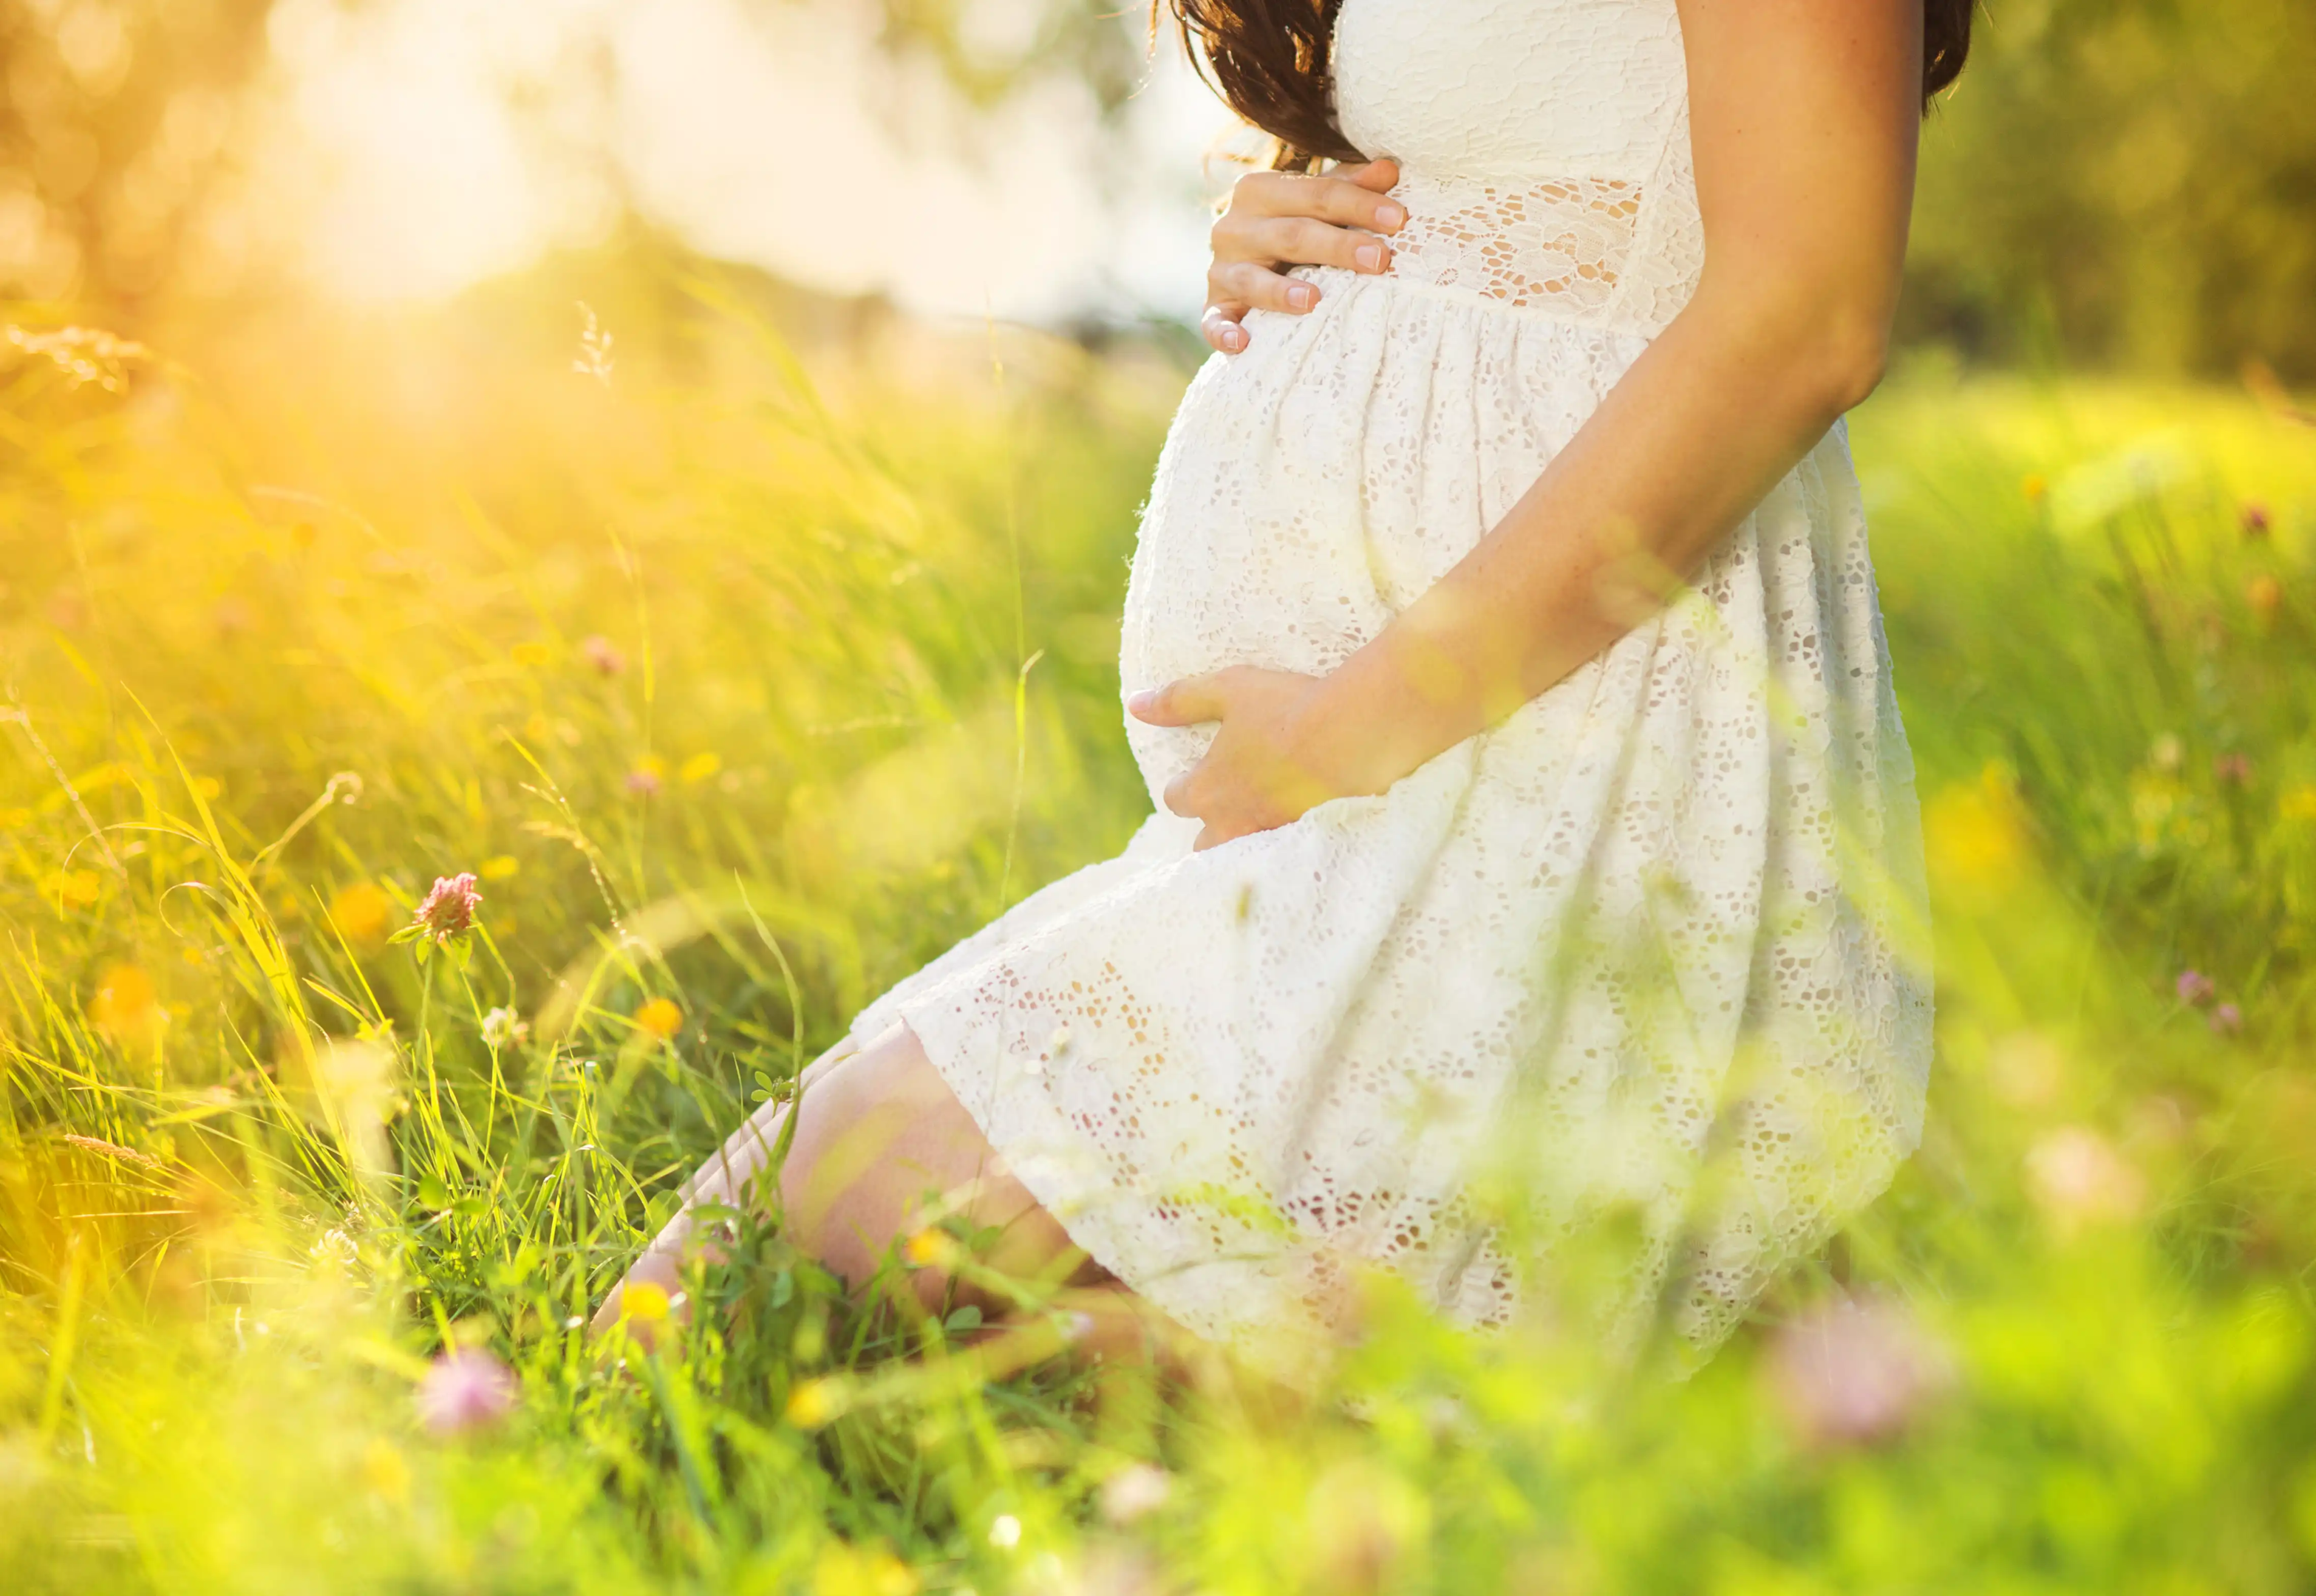 Use-Jojo-mama-bebe-code-to-make-best-of-your-pregnancy